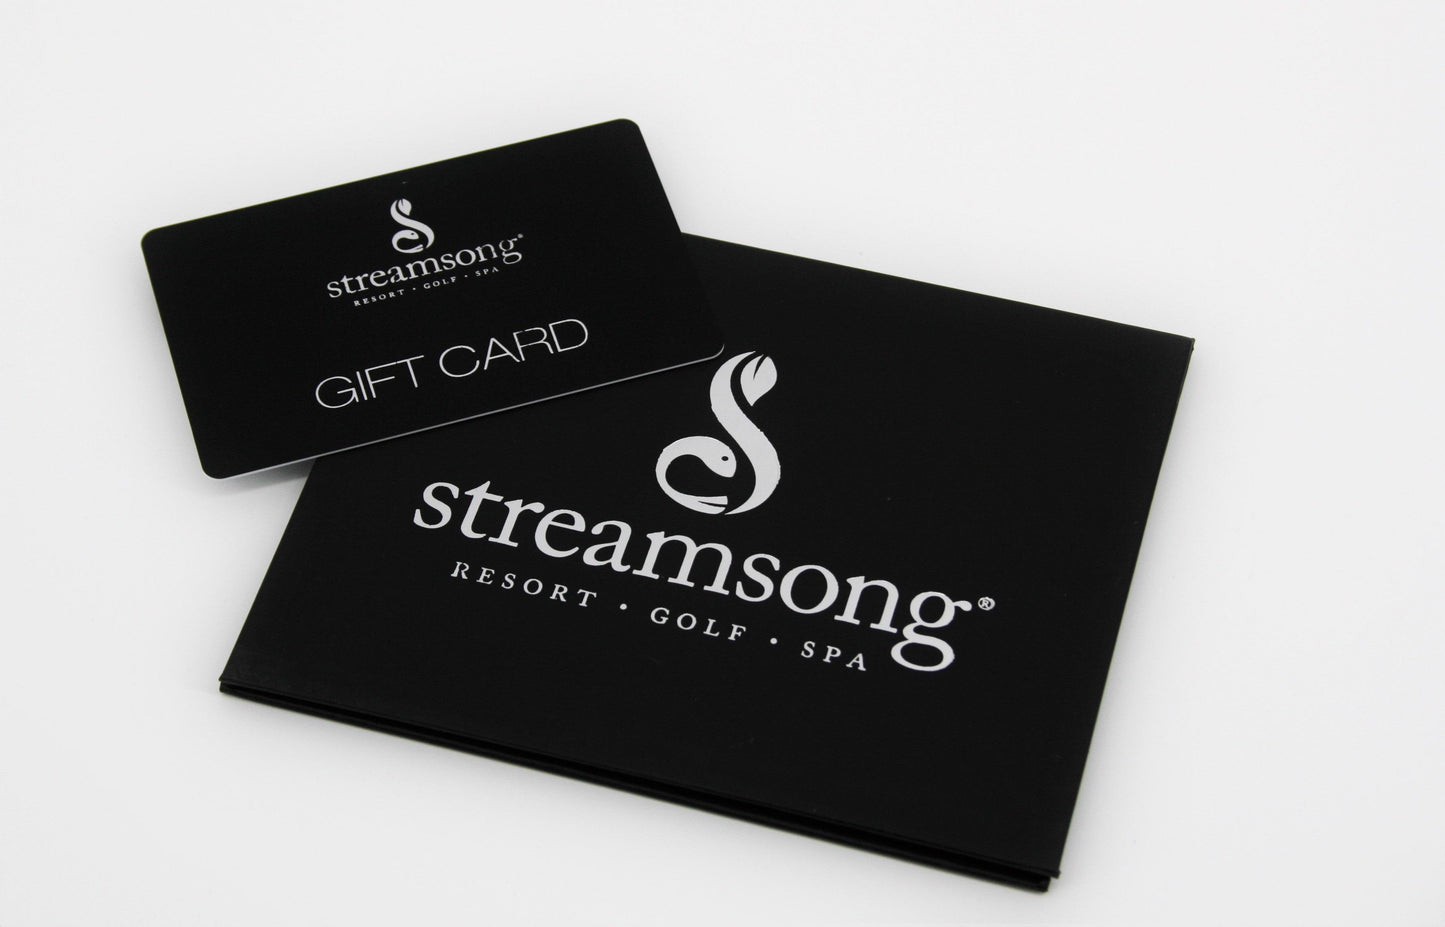 Streamsong Gift Card